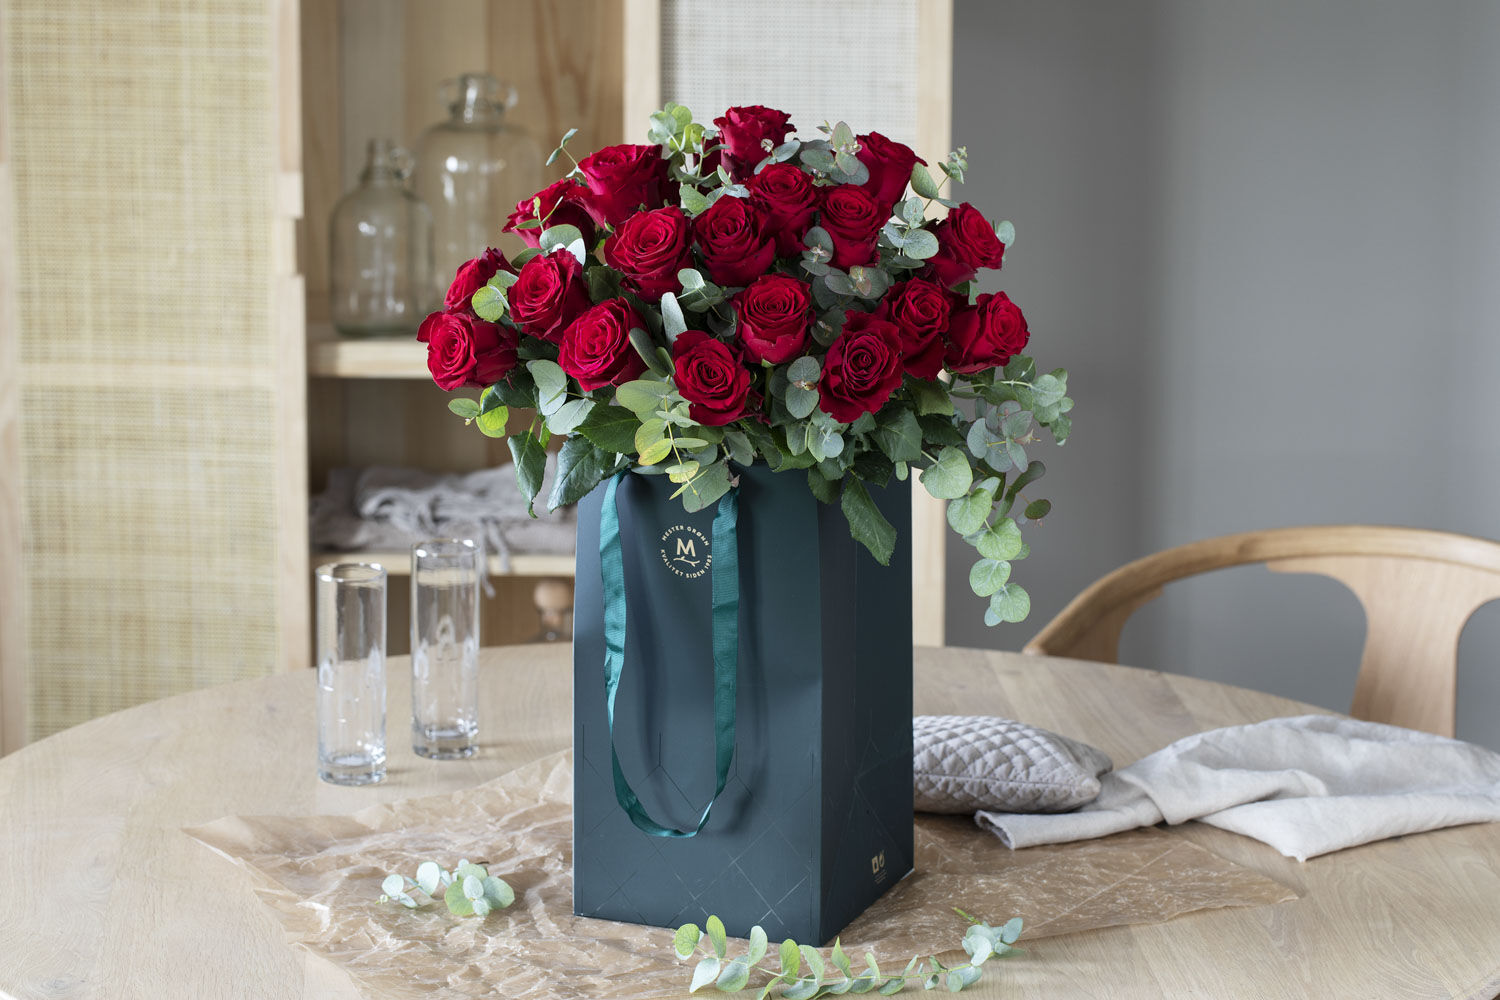 send blomster hjem til kjæresten til Valentine